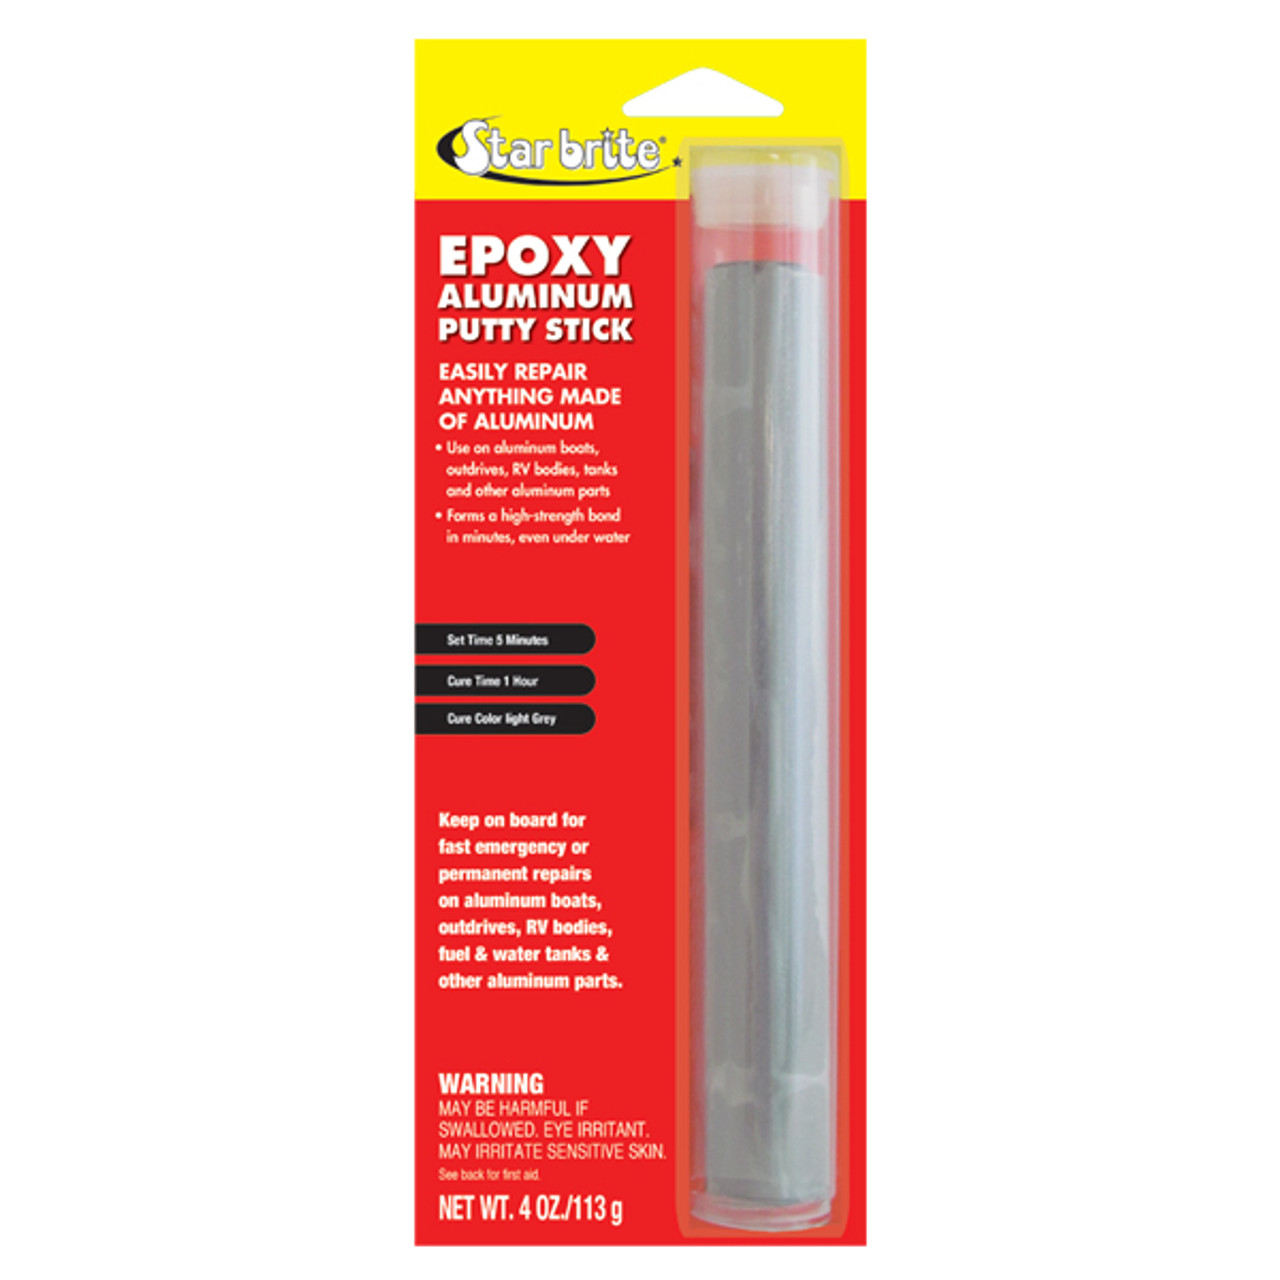 Star Brite Epoxy Aluminum Putty Stick 4 oz.